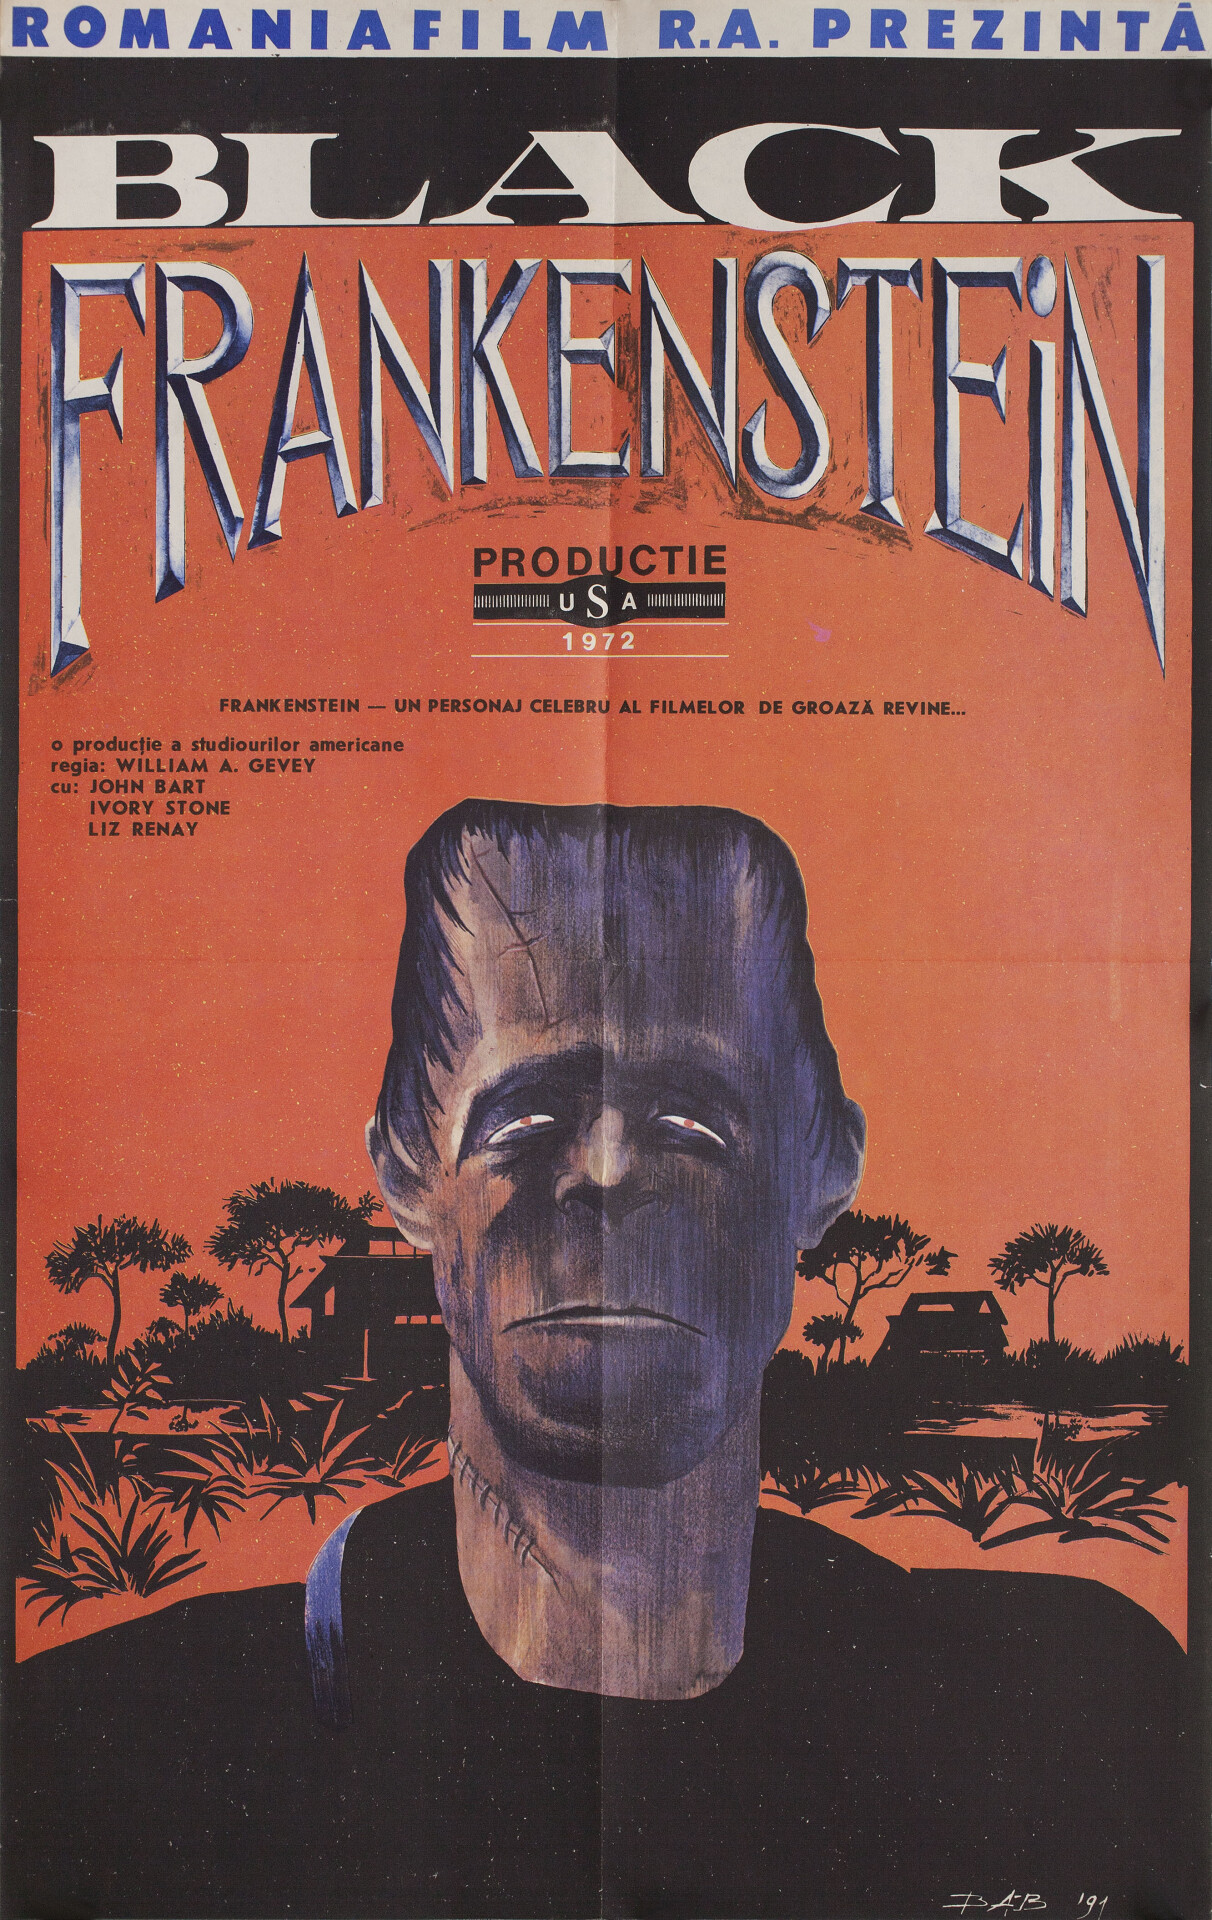 Блэкенштейн (Blackenstein, 1973), режиссёр Уильям А. Леви, румынский постер к фильму (ужасы, 1973 год)